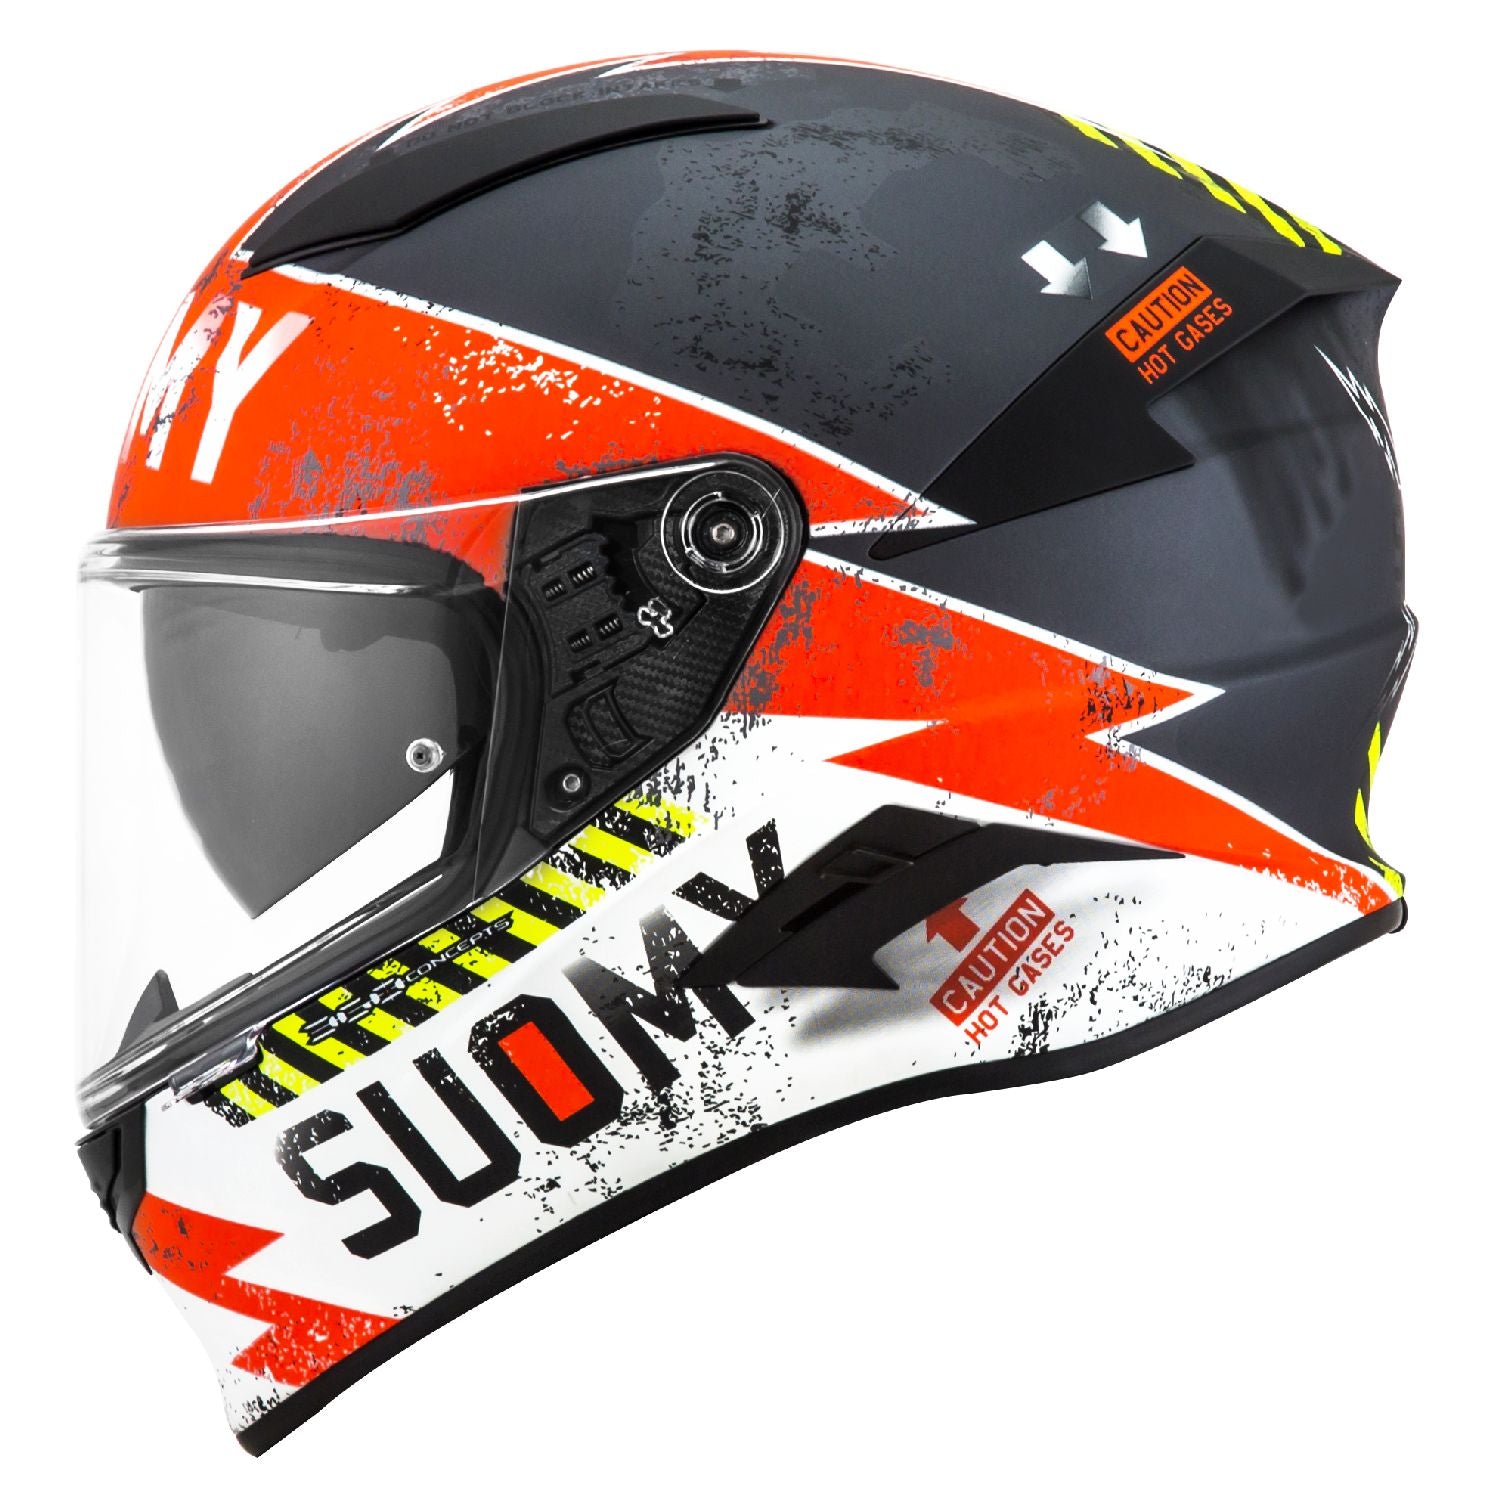 Suomy Speedstar Propeller Full Face Motorcycle Helmet (XS - 2XL)